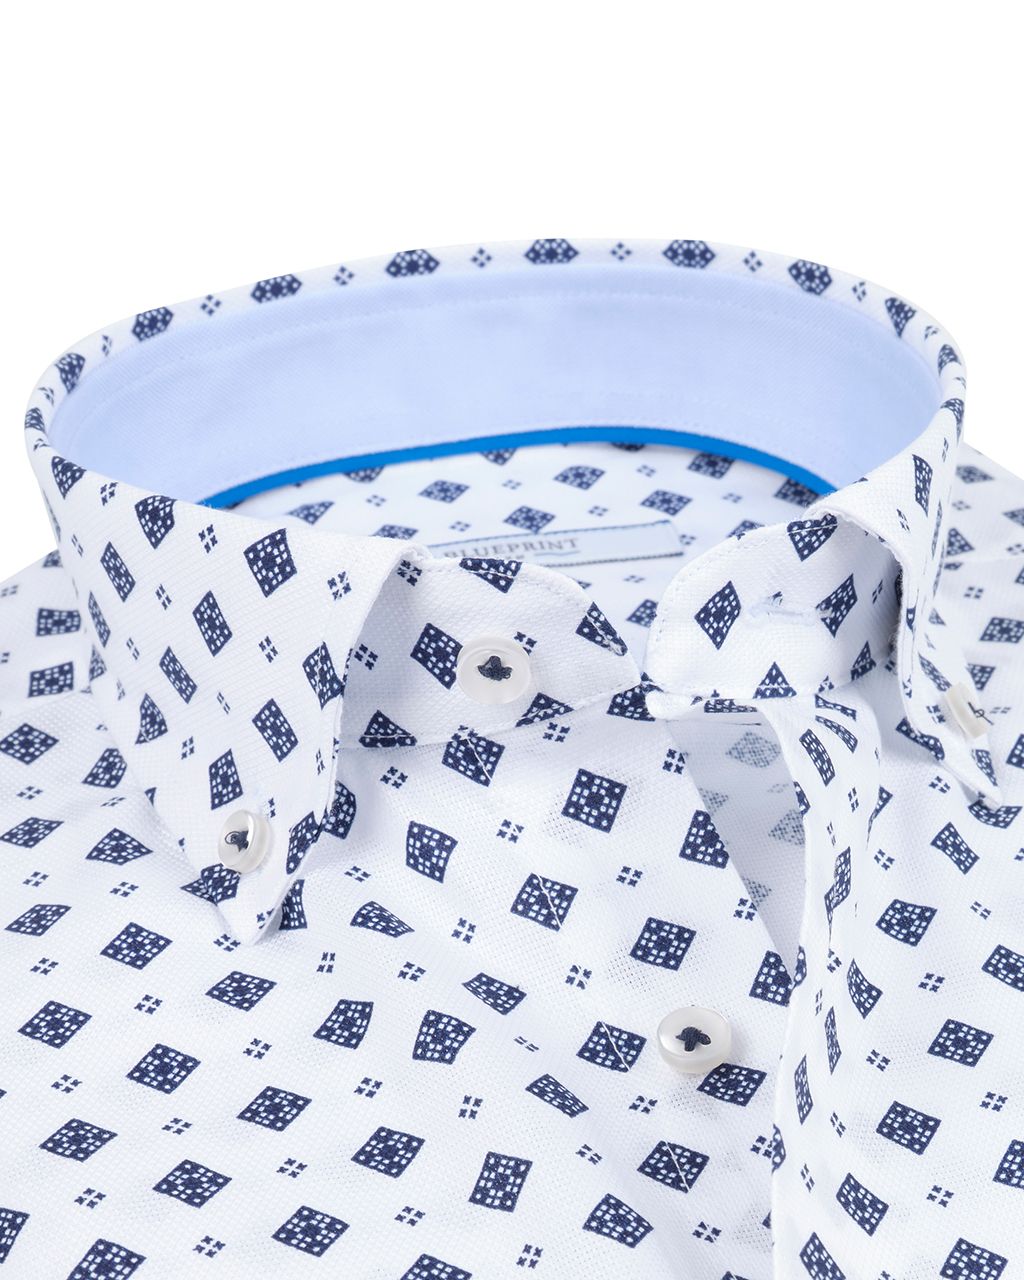 The BLUEPRINT Premium Trendy Overhemd LM Wit dessin 078405-001-L